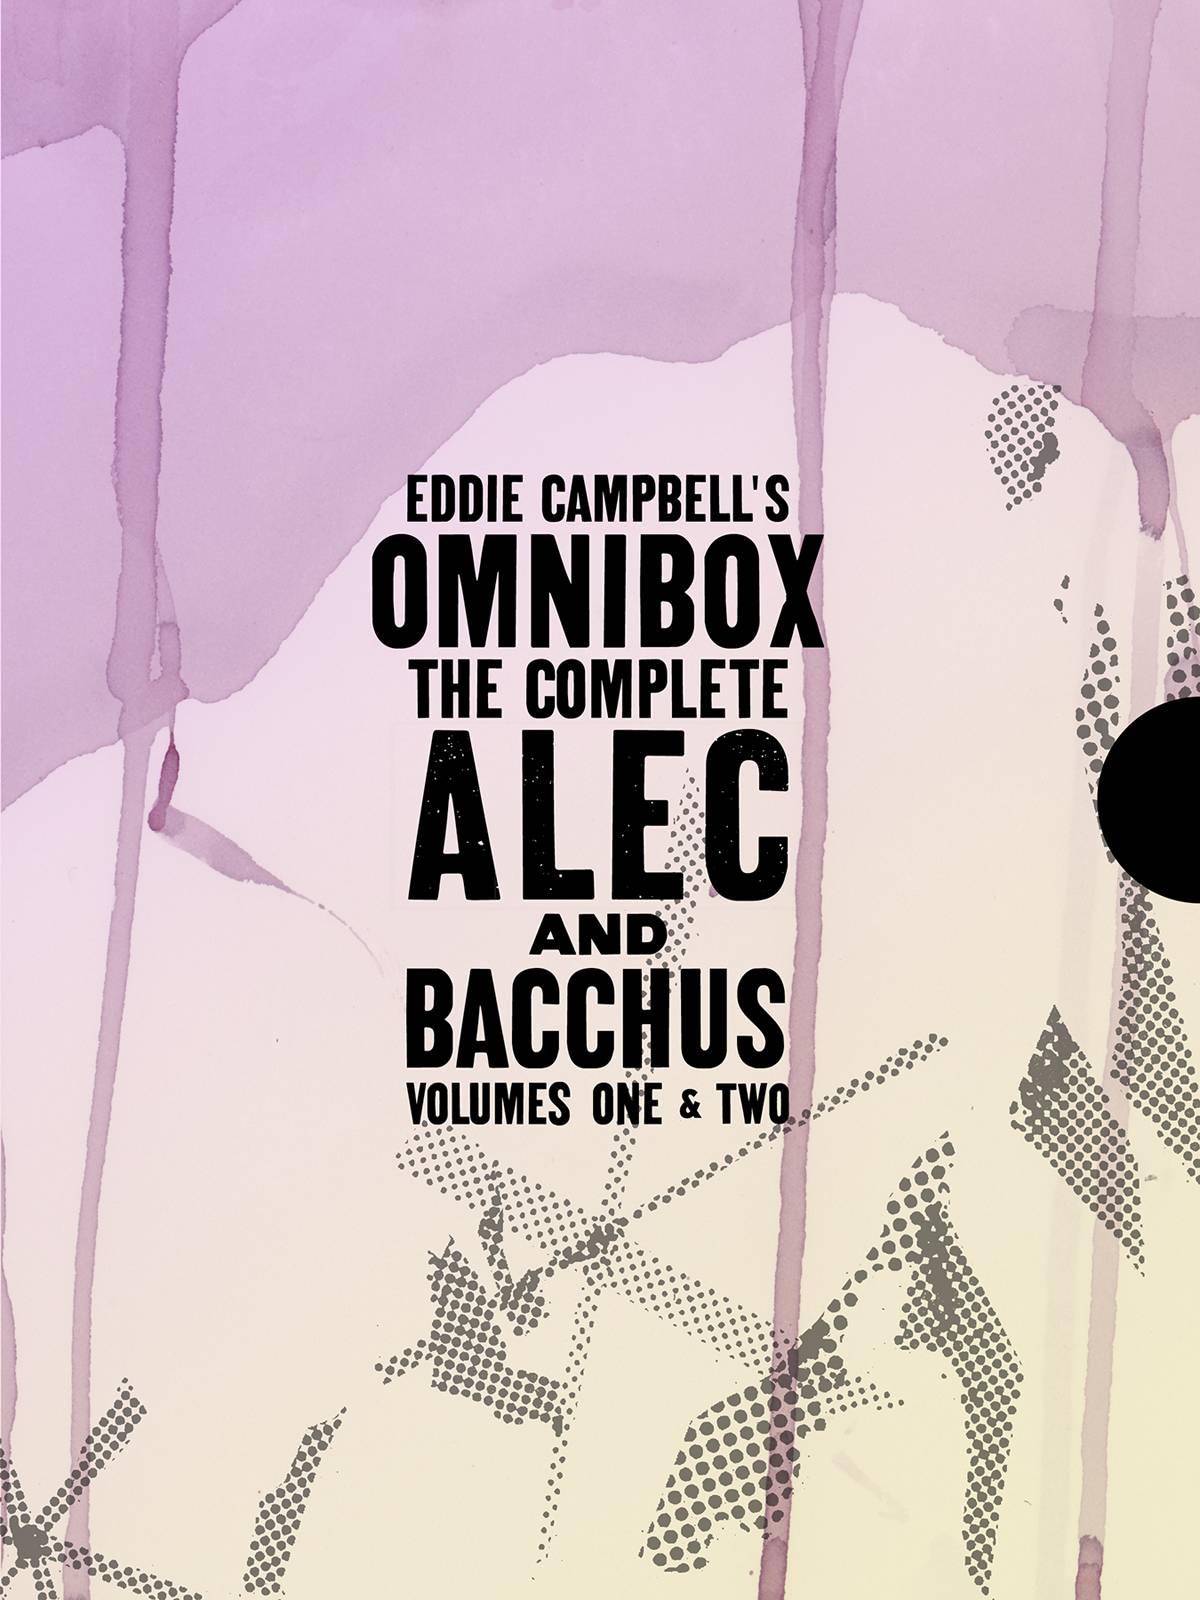 EDDIE CAMPBELL OMNIBOX GN - Eddie Campbell